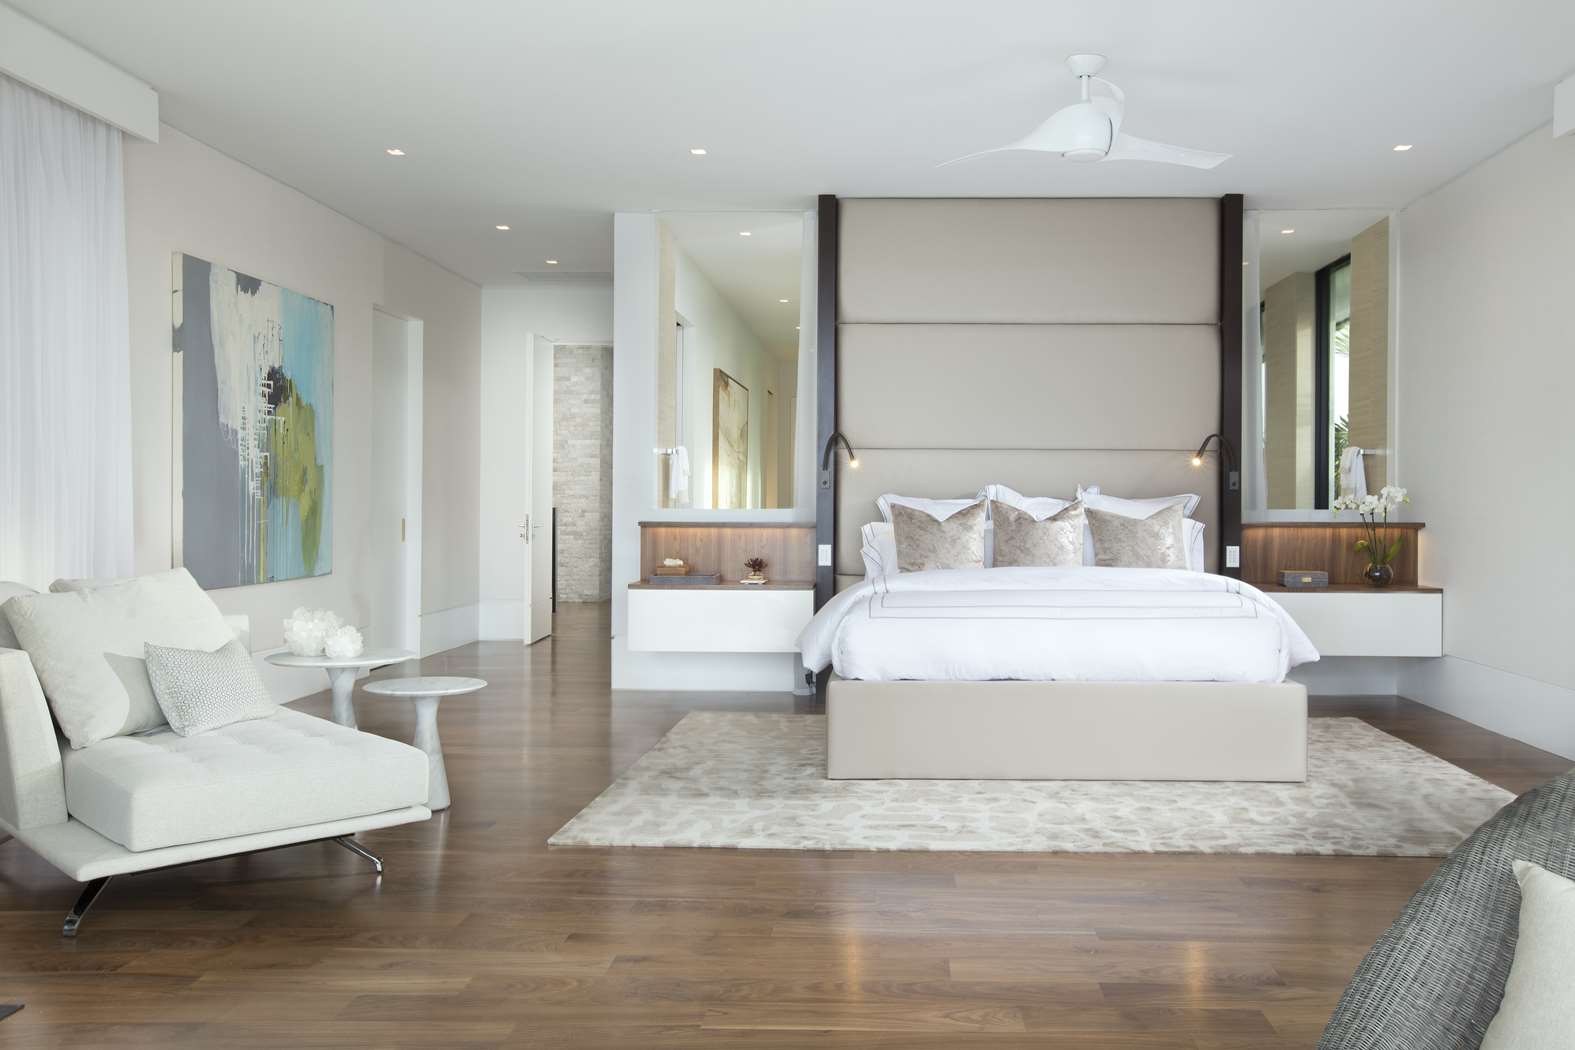 25 Master Bedroom Design Ideas Home Dreamy